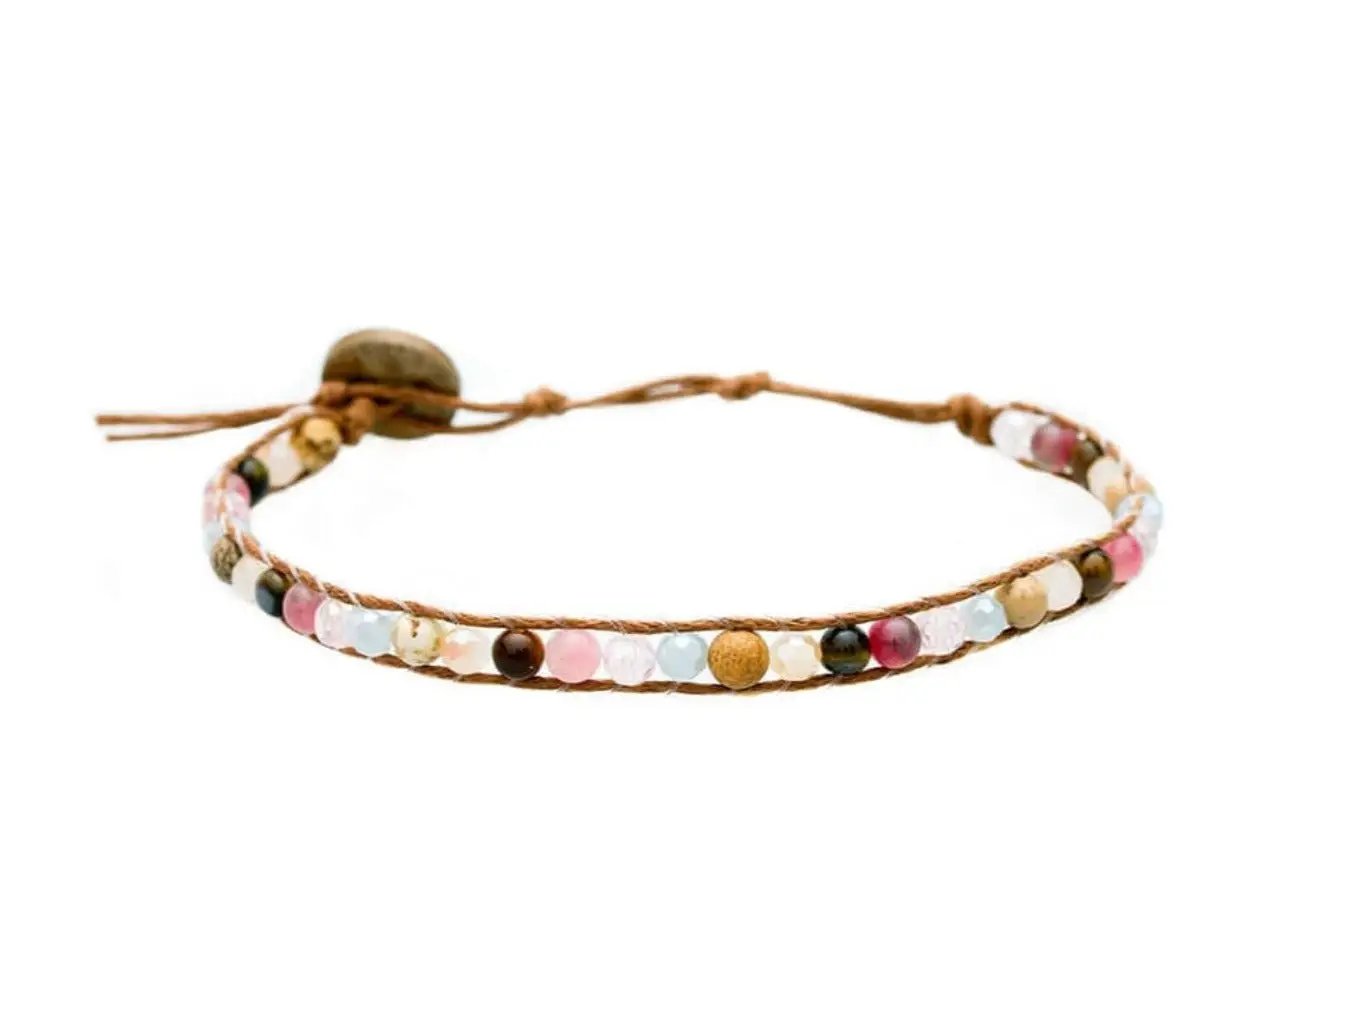 Energy Bracelet with Tiger's Eye, Jade and Jasper Semi Precious Gem Stone Beads by Lotus and Luna